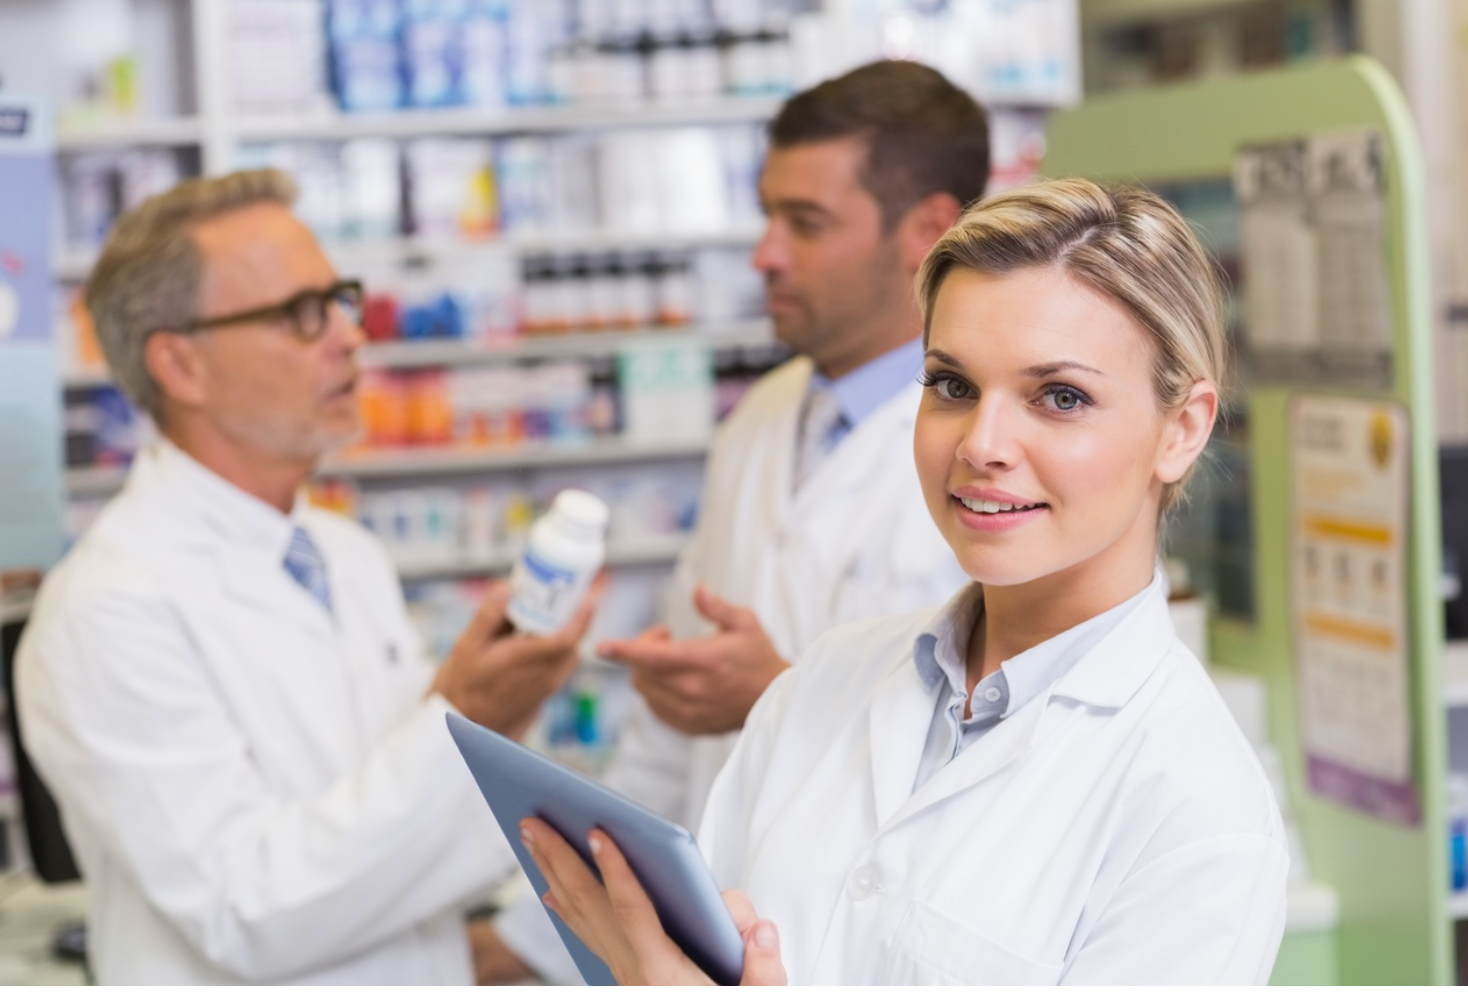 Pharmacist Impact on Provider Productivity and Billing: Ambulatory Care Clinic